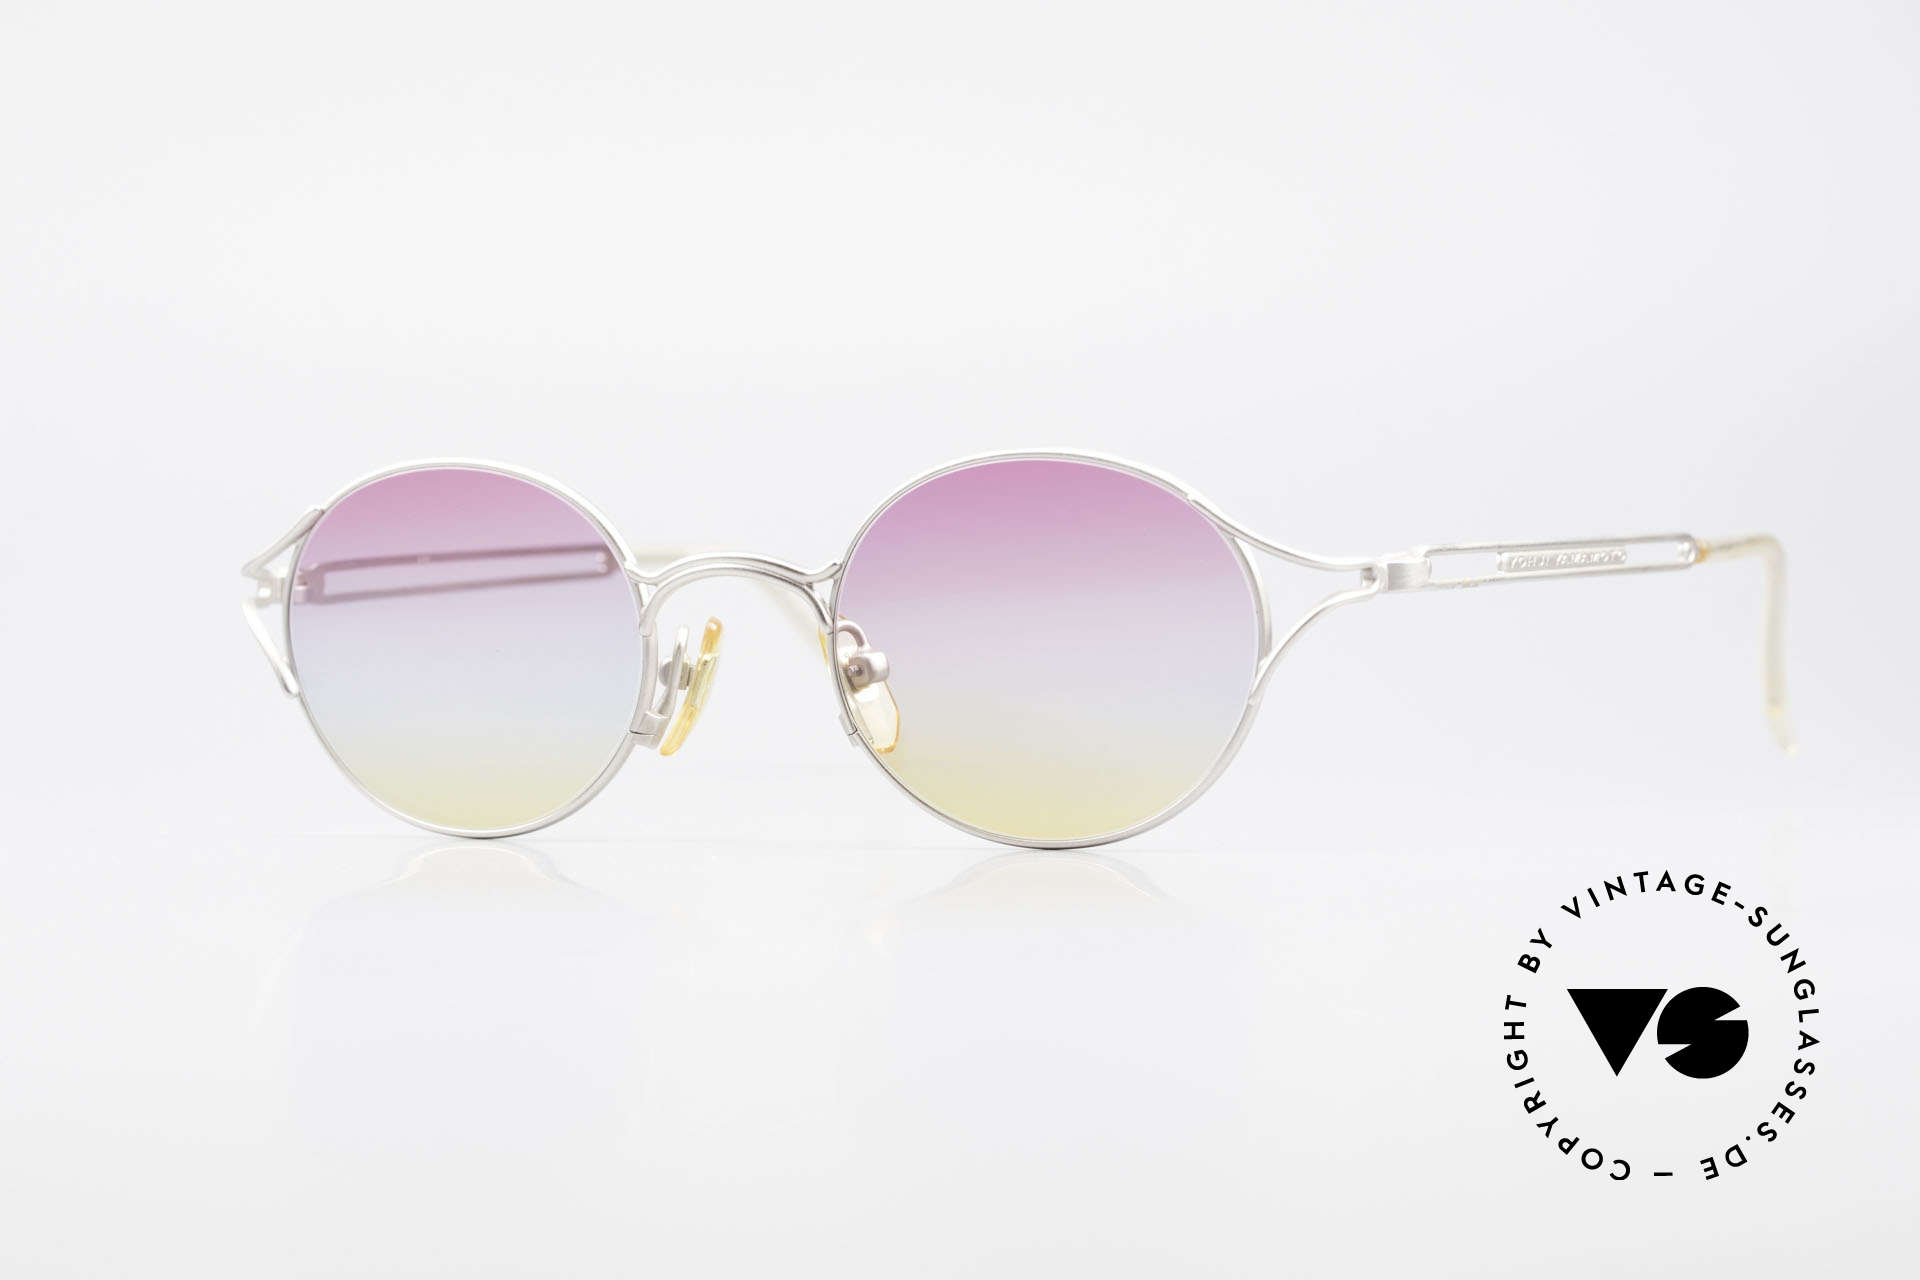 Yohji Yamamoto 51-4103 Panto Designer Sunglasses, extraordinary vintage Yohji Yamamoto shades of the 90s, Made for Men and Women